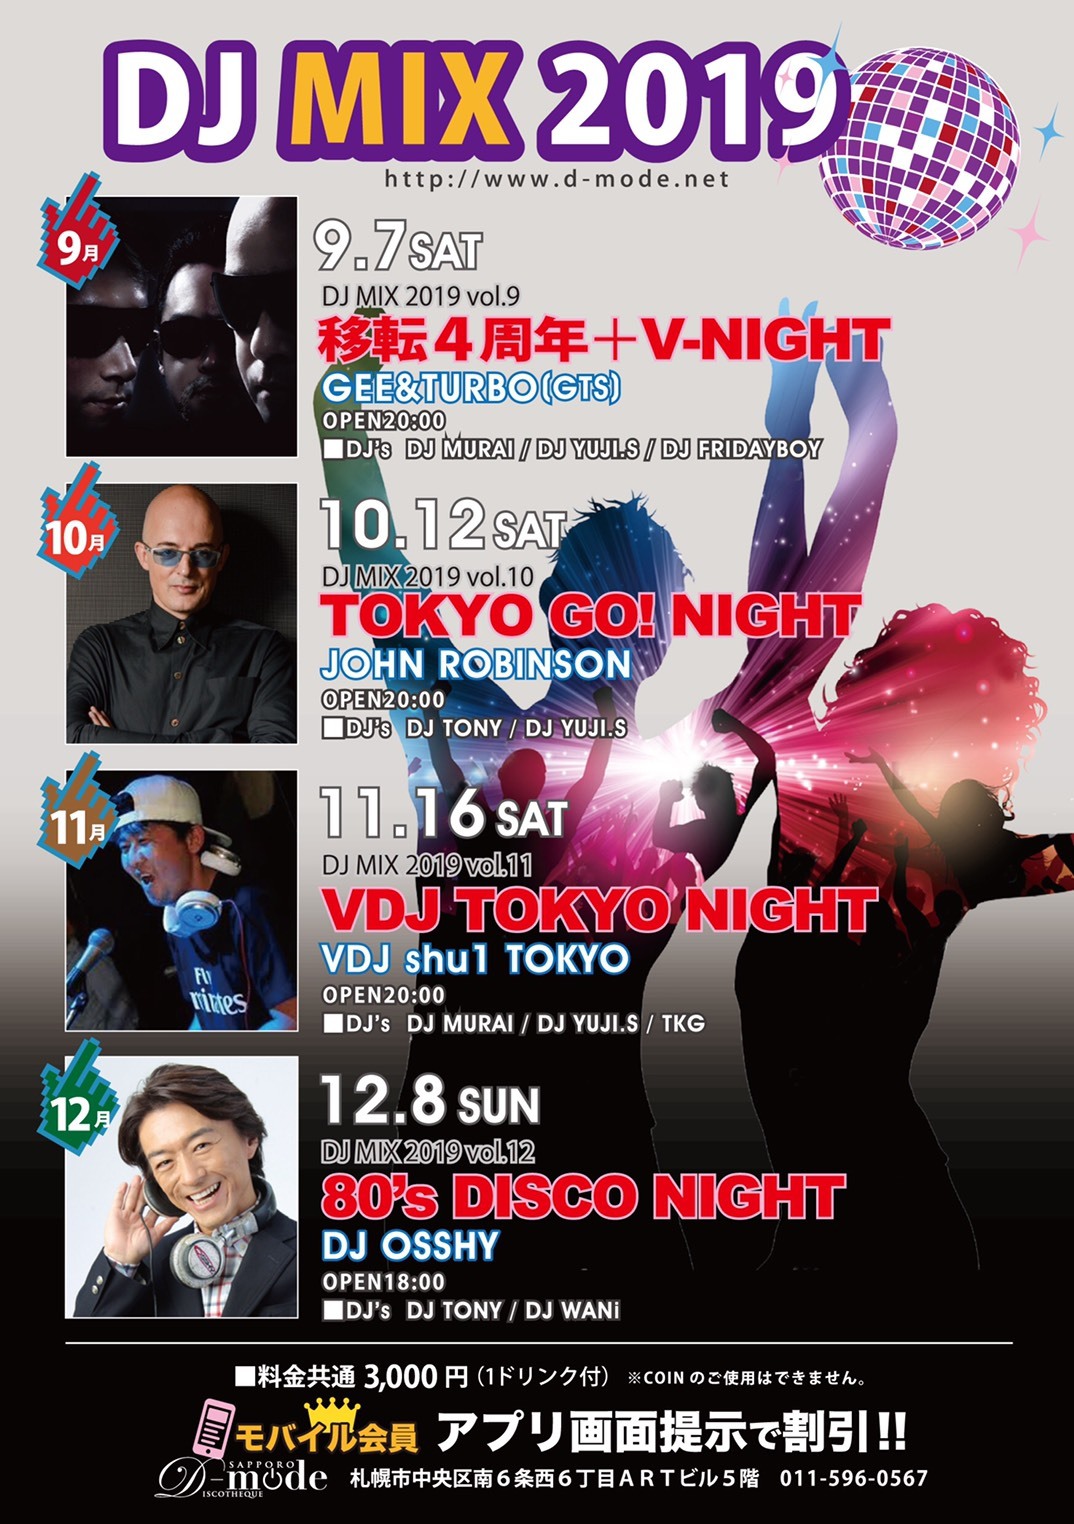 DJ MIX 2019 vol.11-VDJ TOKYO NIGHT-_a0219438_16293682.jpg